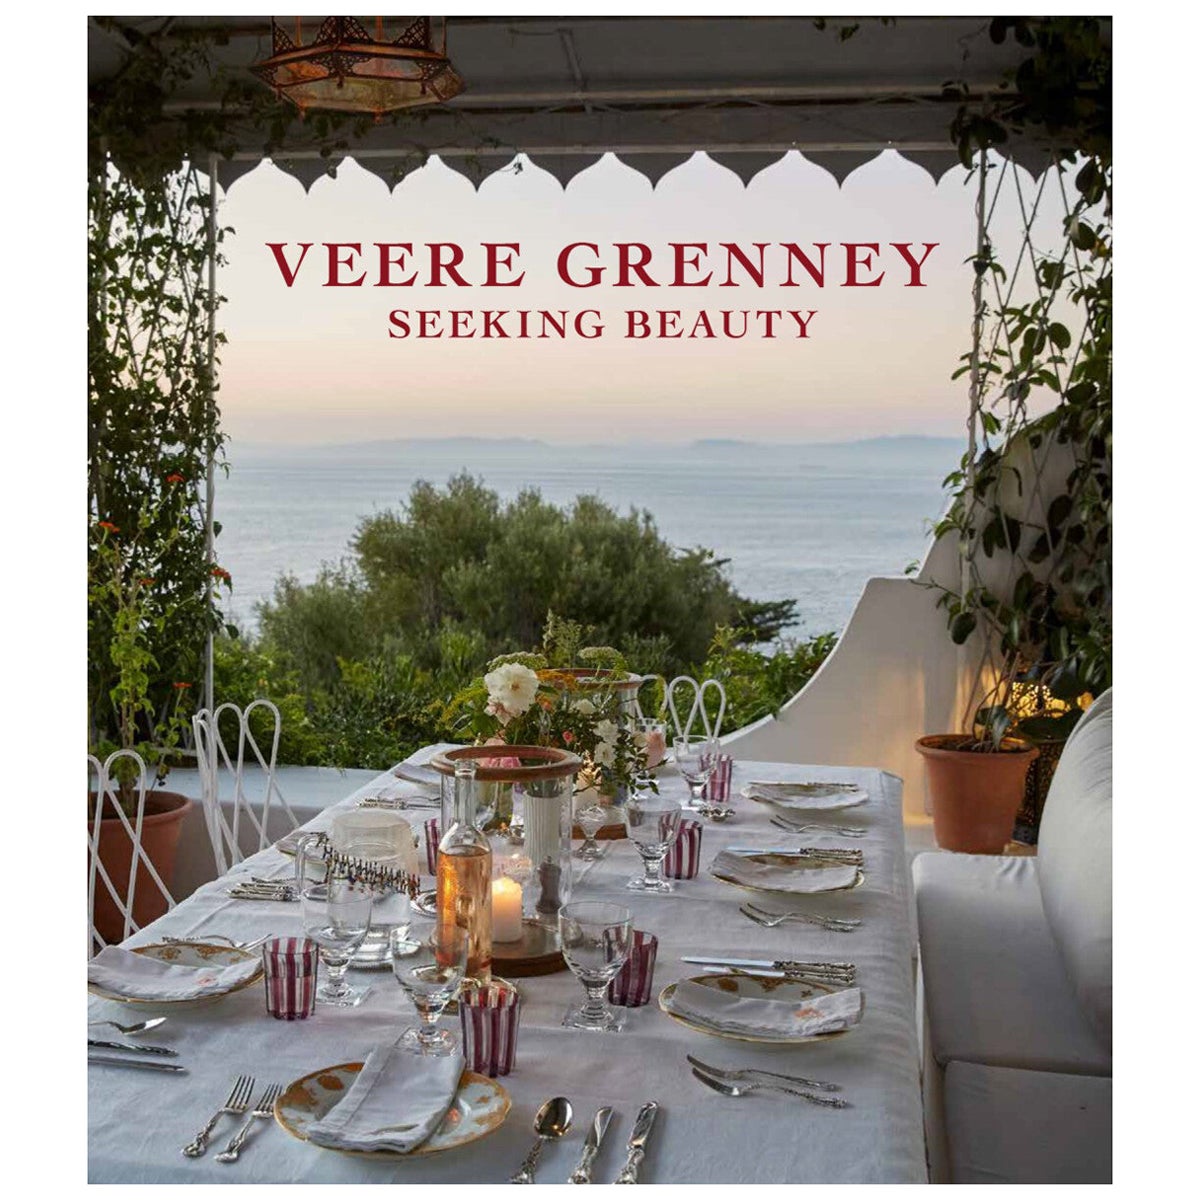 Veere Grenney Seeking Beauty, Buch „Seeking Beauty“ von Veere Grenney im Angebot